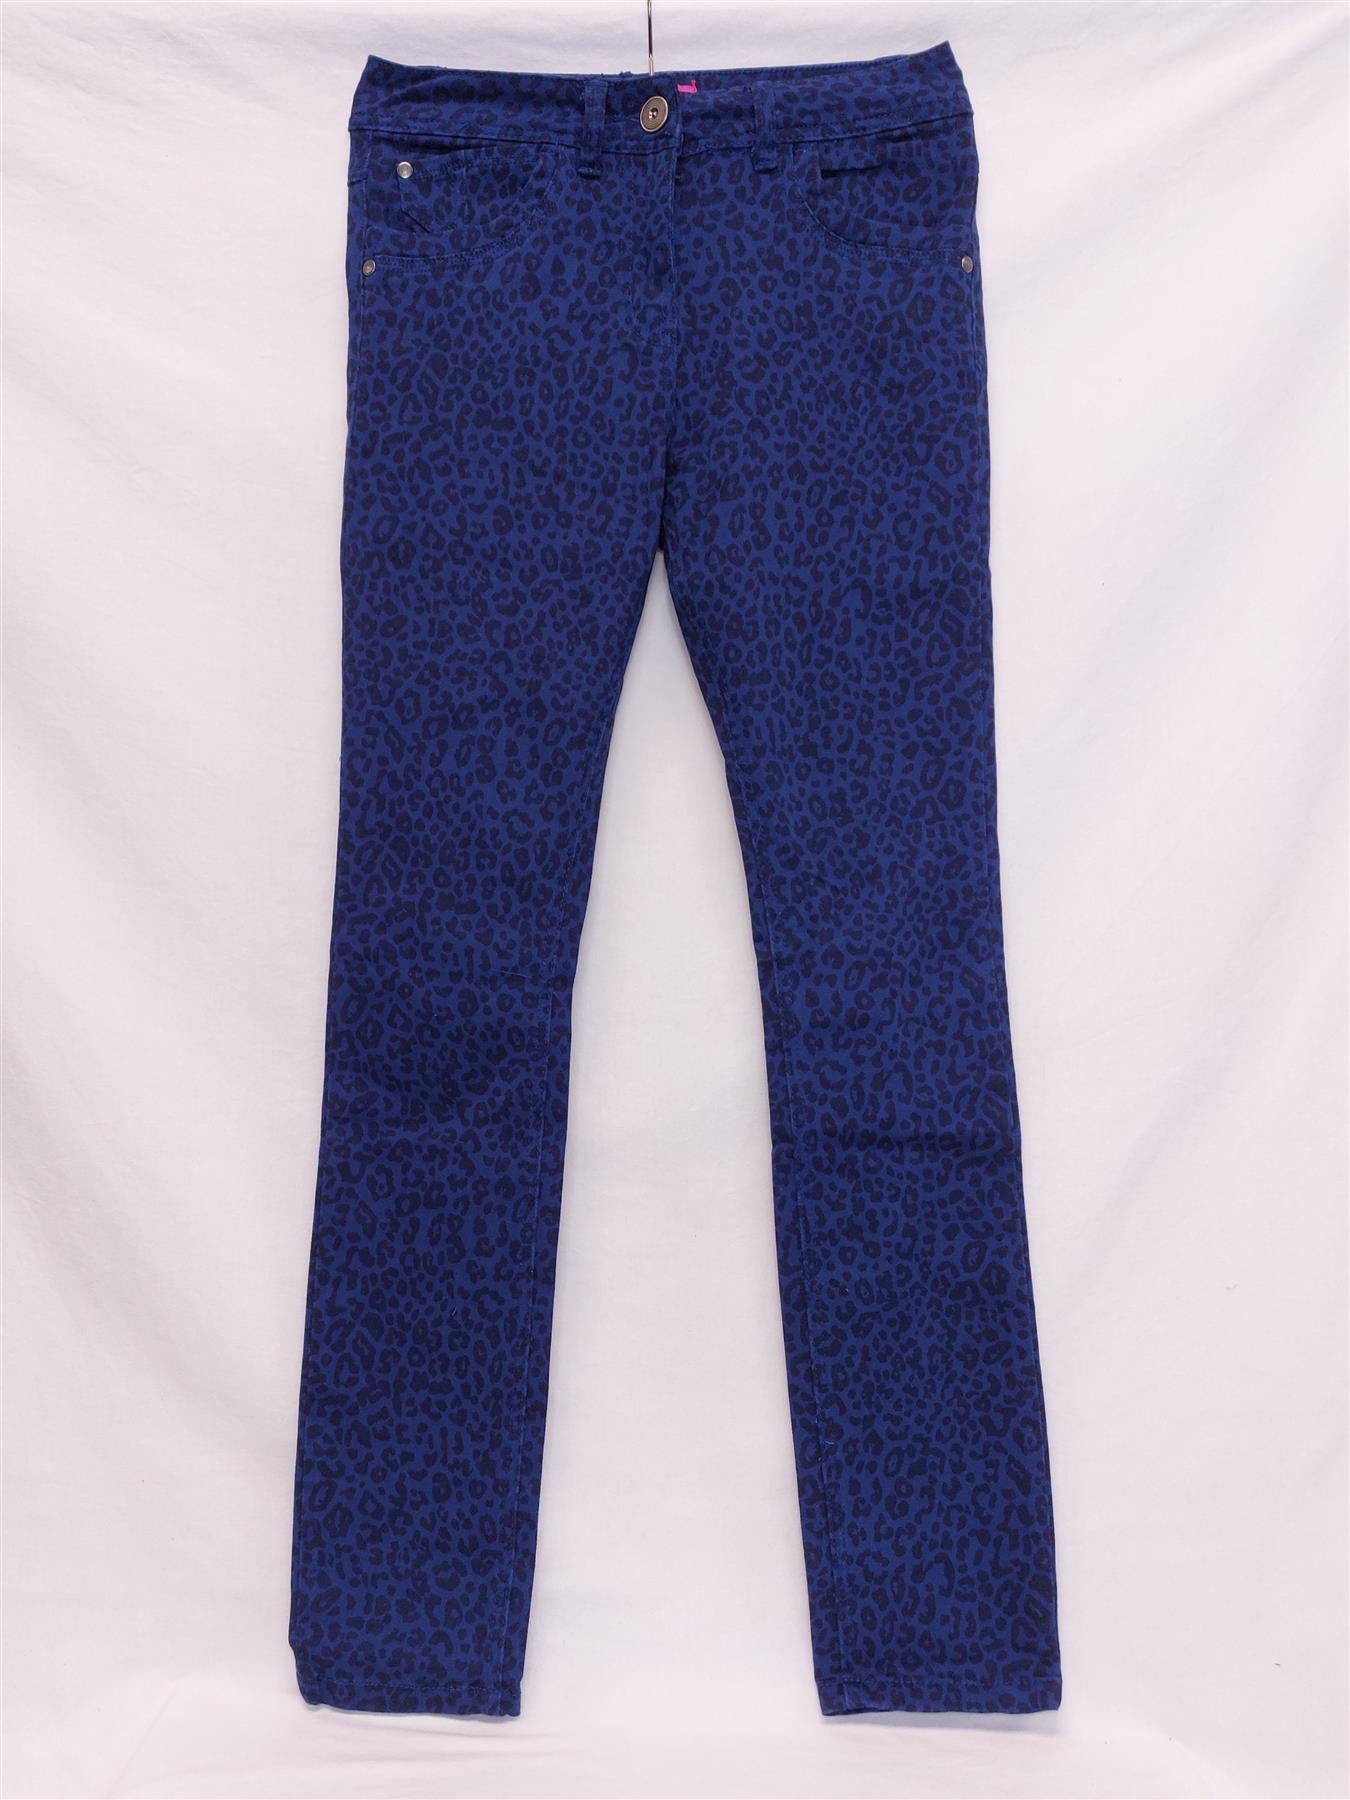 Women's Leopard Print Jeans Skinny Fit Cotton Stretch Wonderfit Blue/Navy George